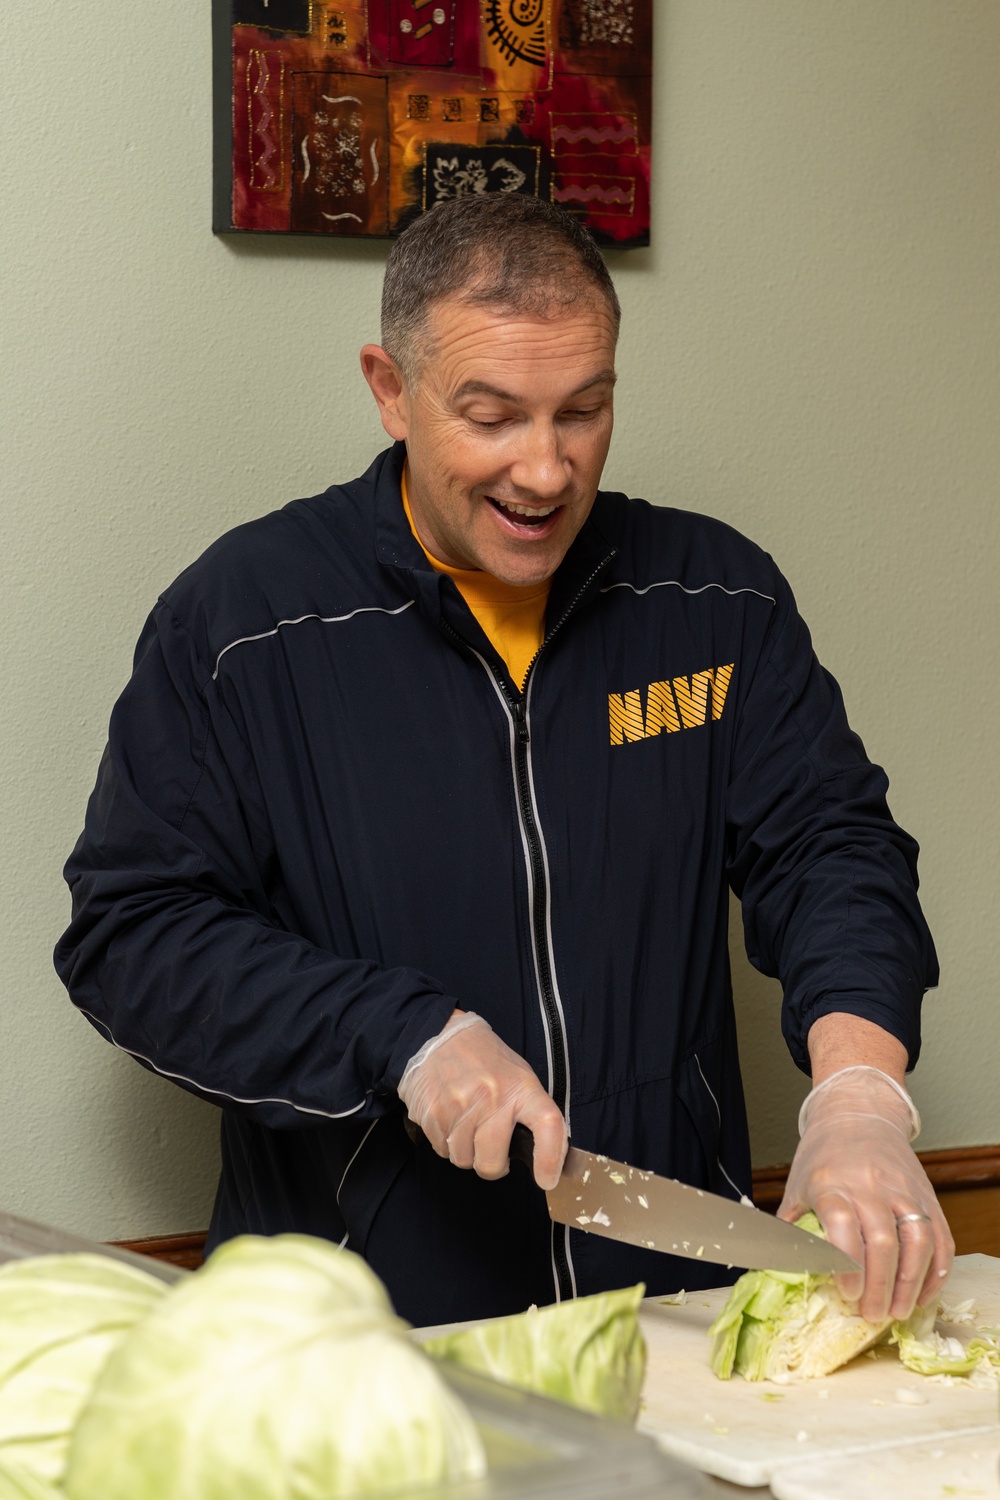 U.S. Navy Sailors Feed Local Homeless Community